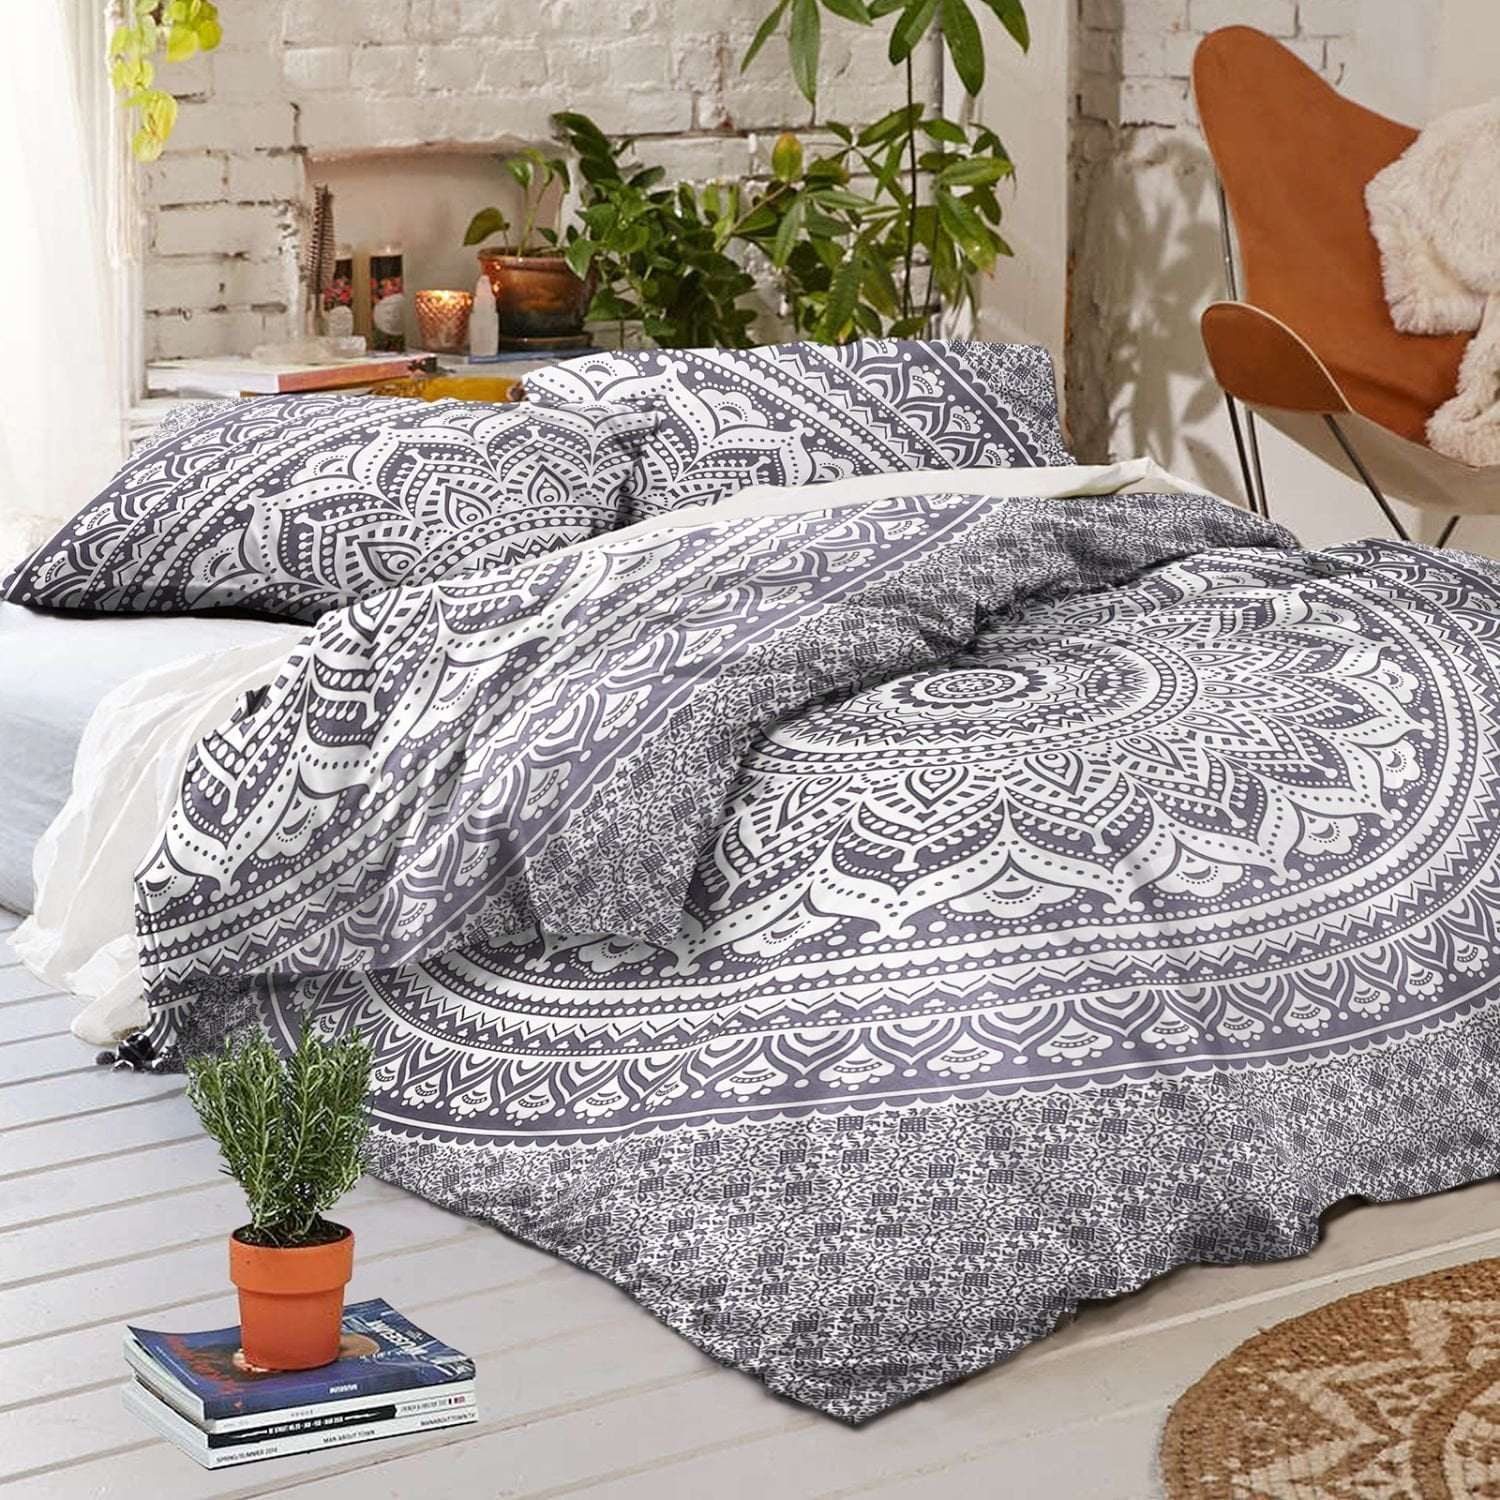 Hippie Bohemian Indian Mandala Bedding Bedspread Bed Cover  Queen Size Blanket